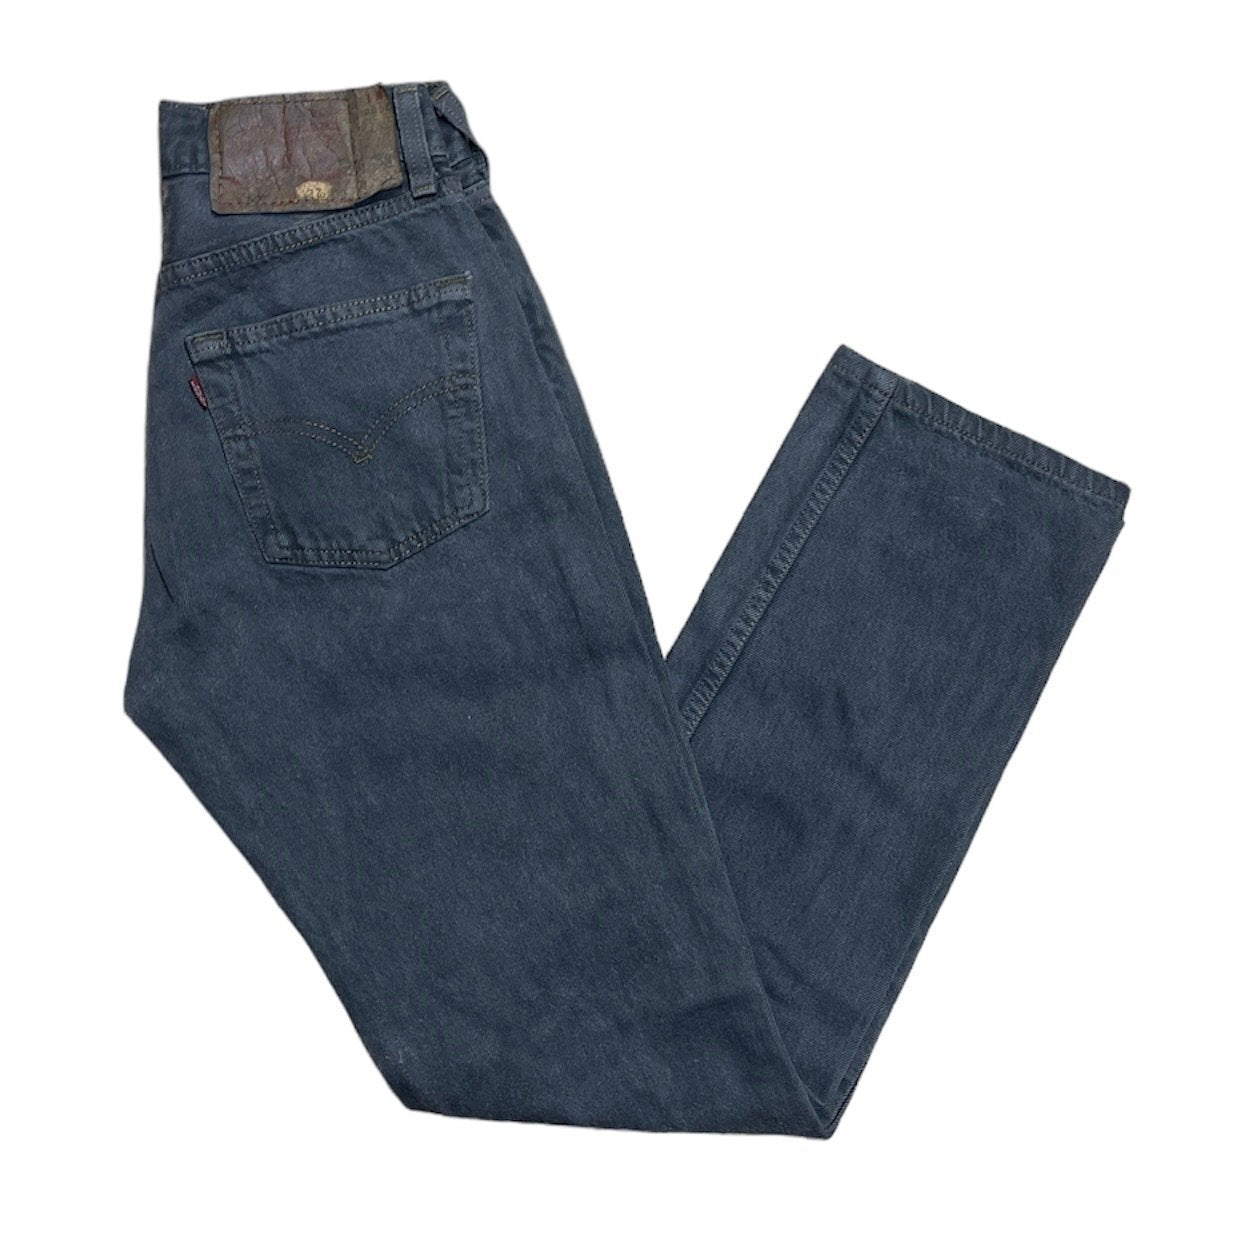 Vintage Levis 501 Grey/Black Jeans (W26/L30) (W)